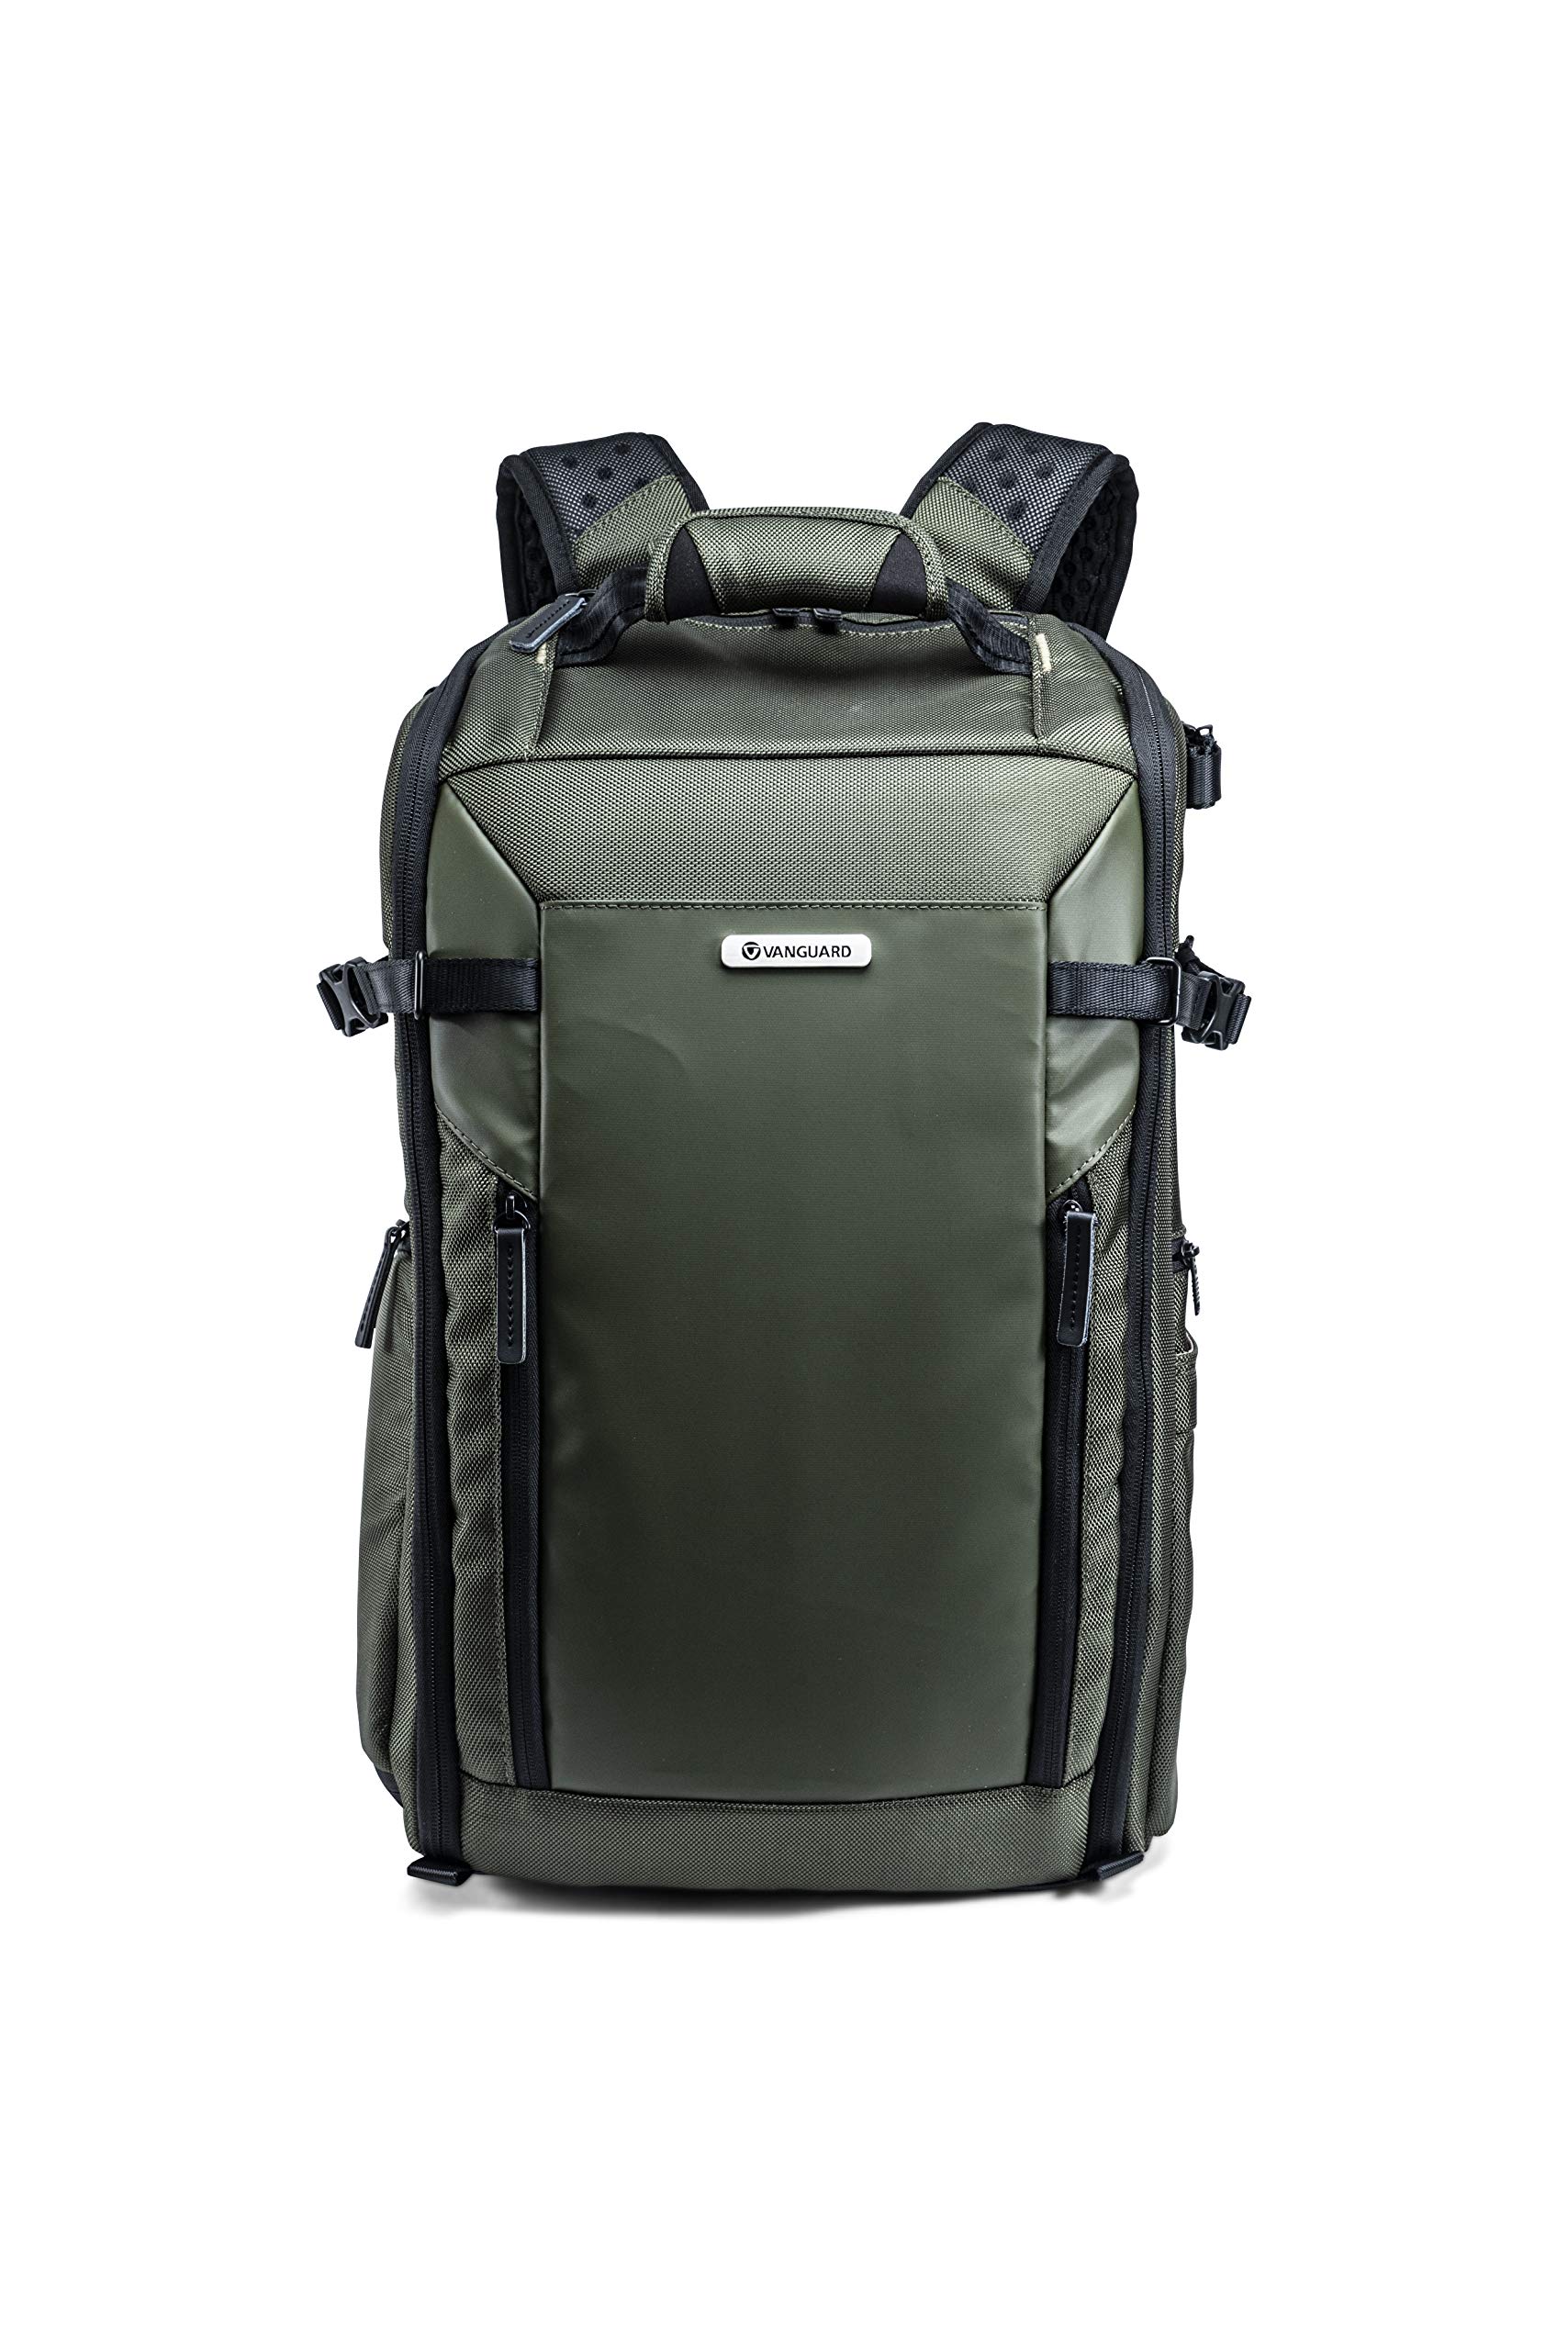 Vanguard VEO Select 48BF GR Camera Backpack, Green